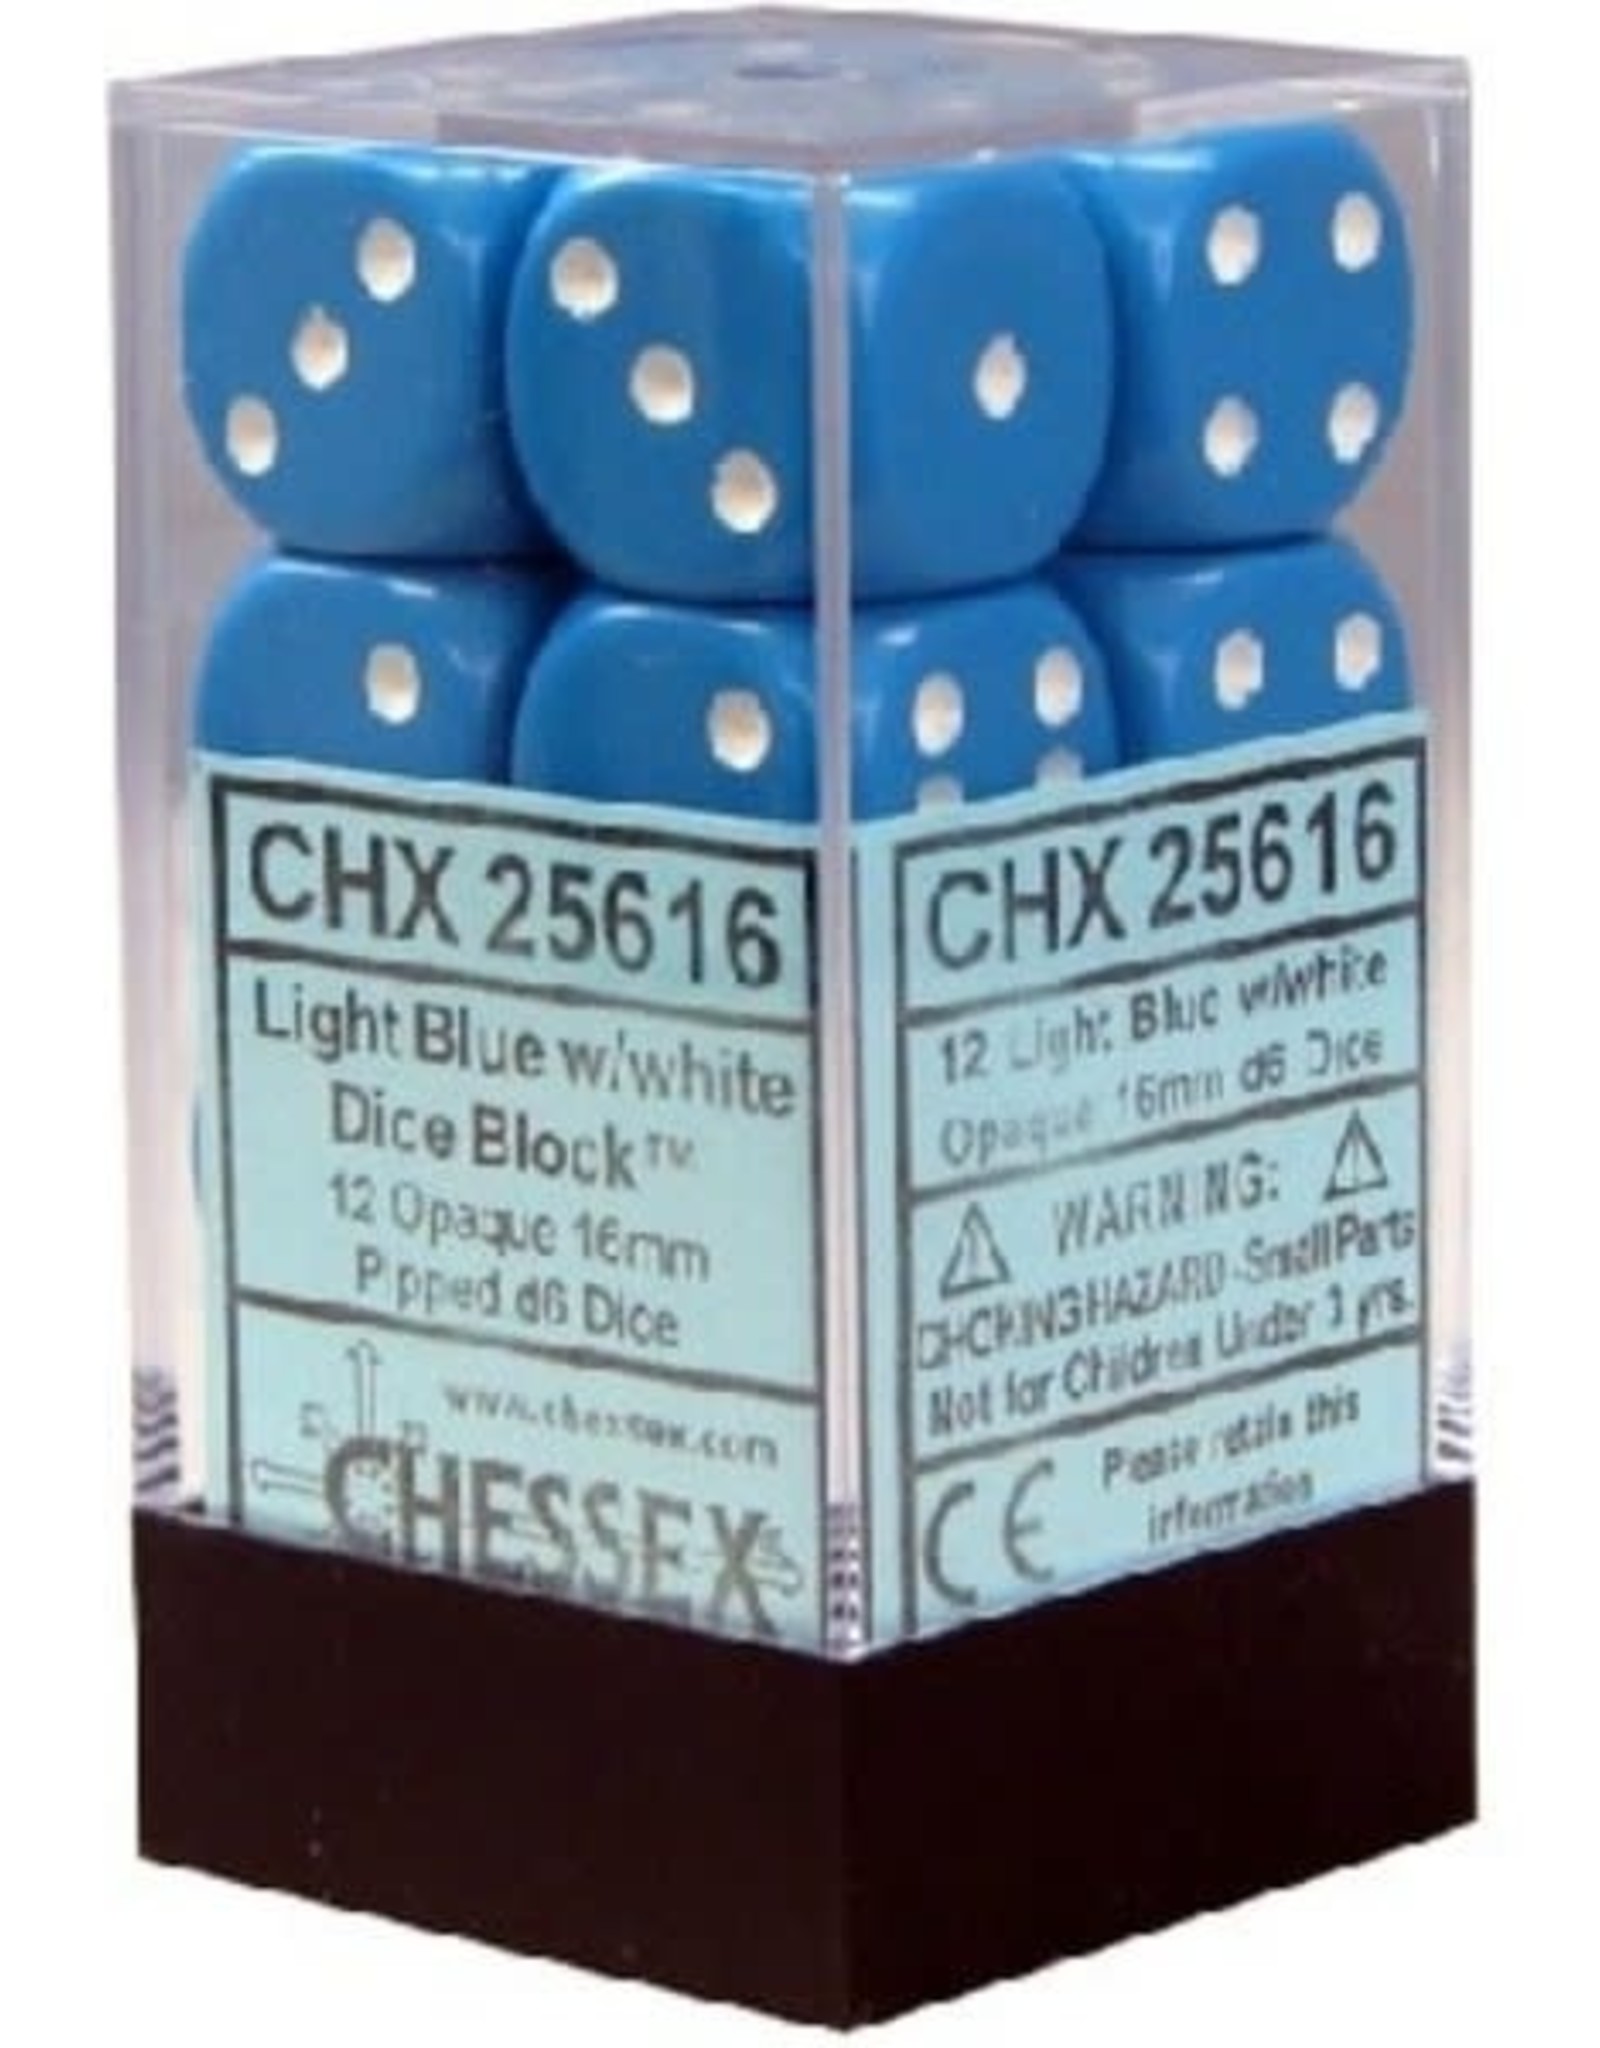 Chessex Dice - 12D6 Opaque Light Blue/White